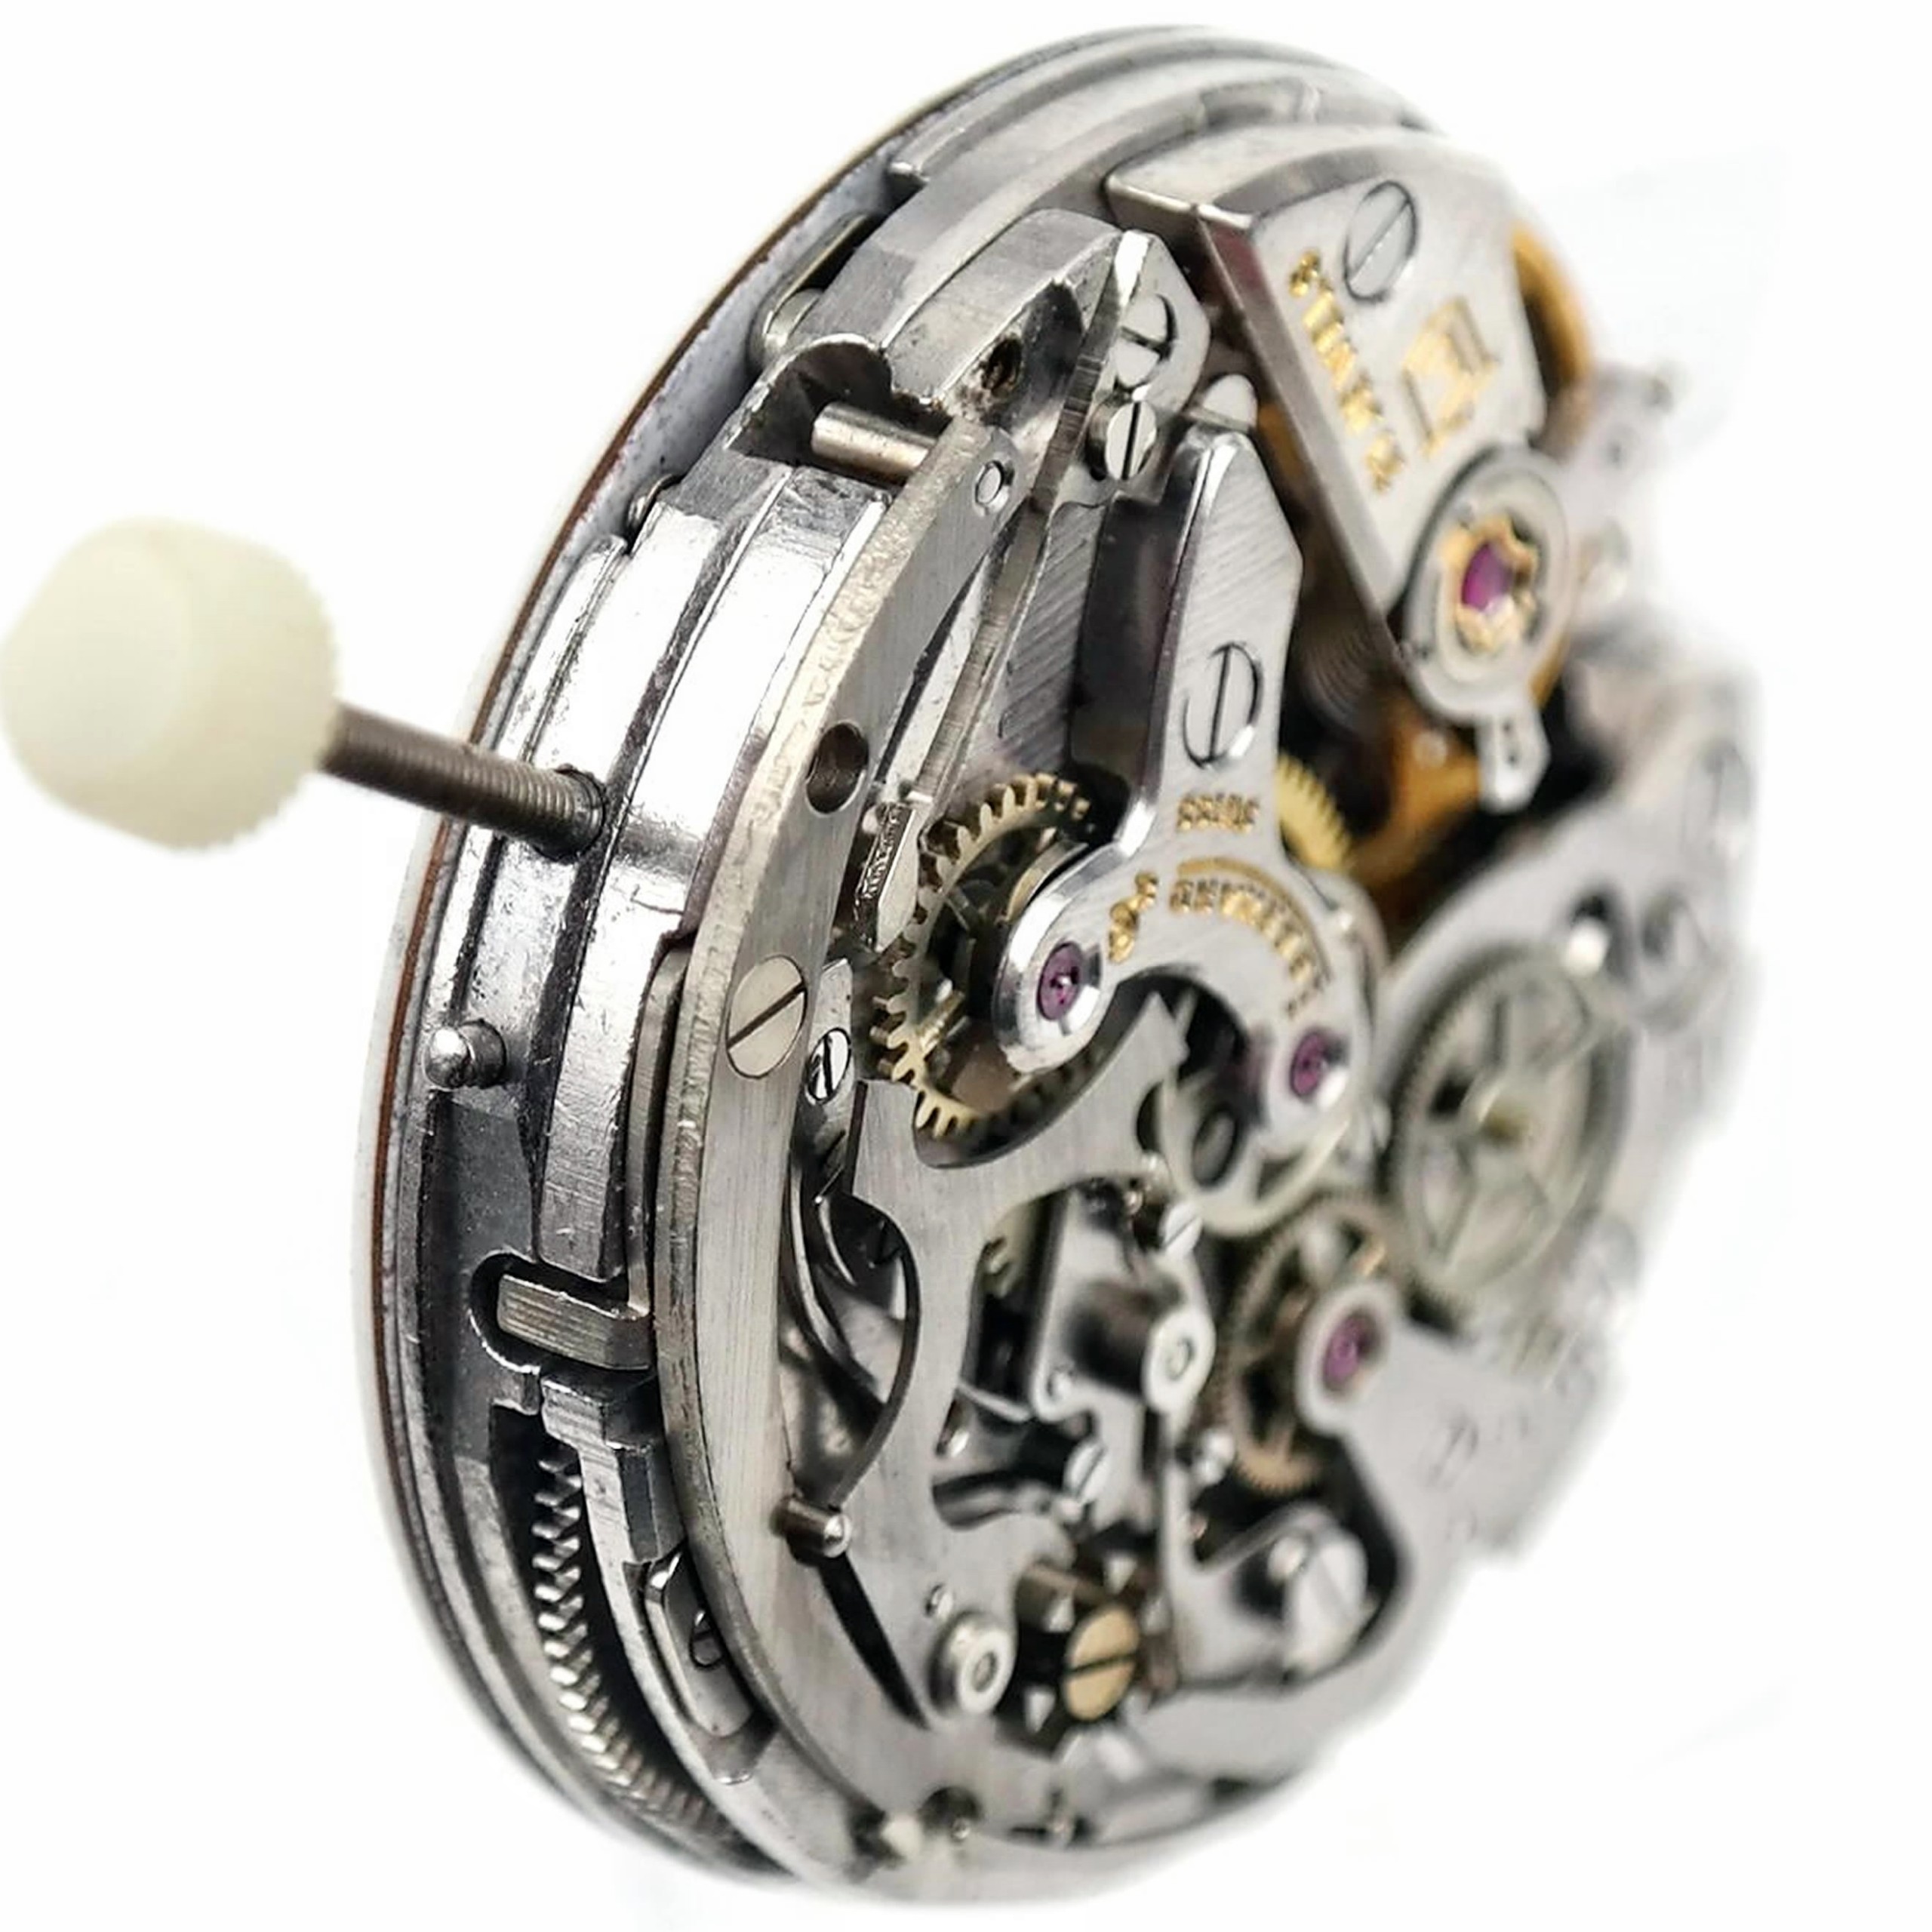 EBERHARD & Co Cal. 310-82 (14000) Column Wheel Chronograph Watch Movement Kit